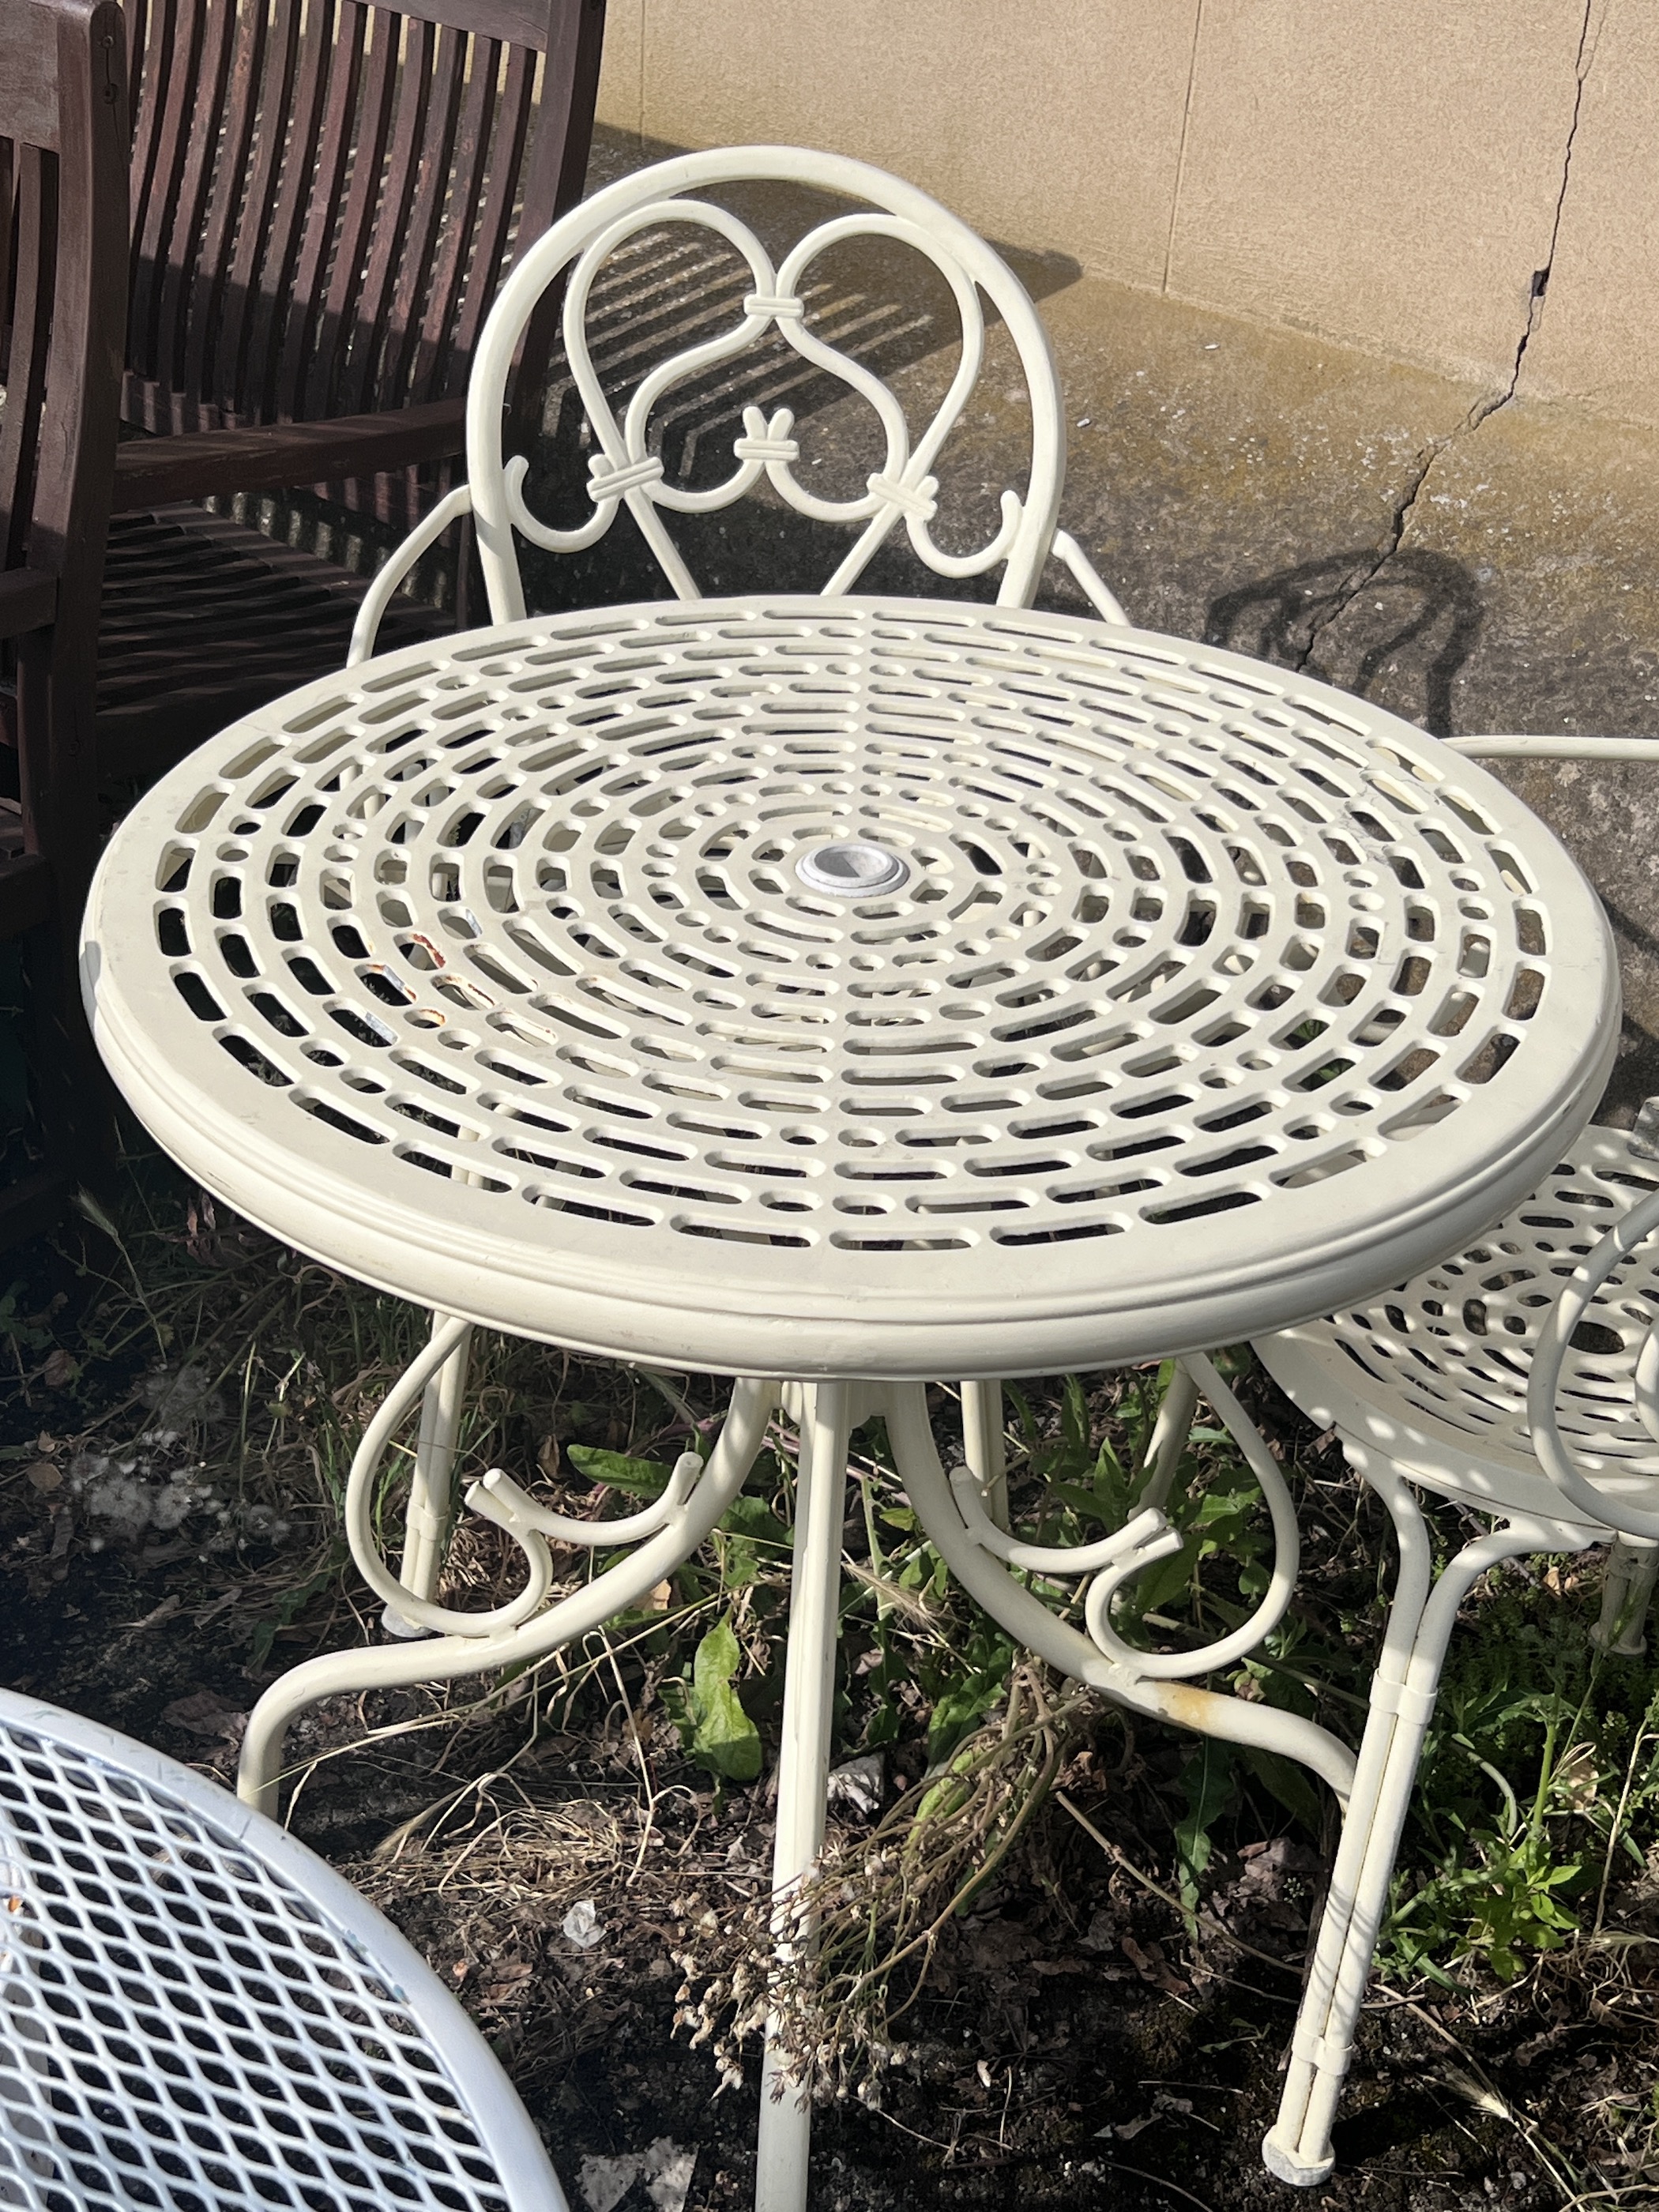 A circular aluminium garden table, diameter 74cm, height 73cm, and two elbow chairs